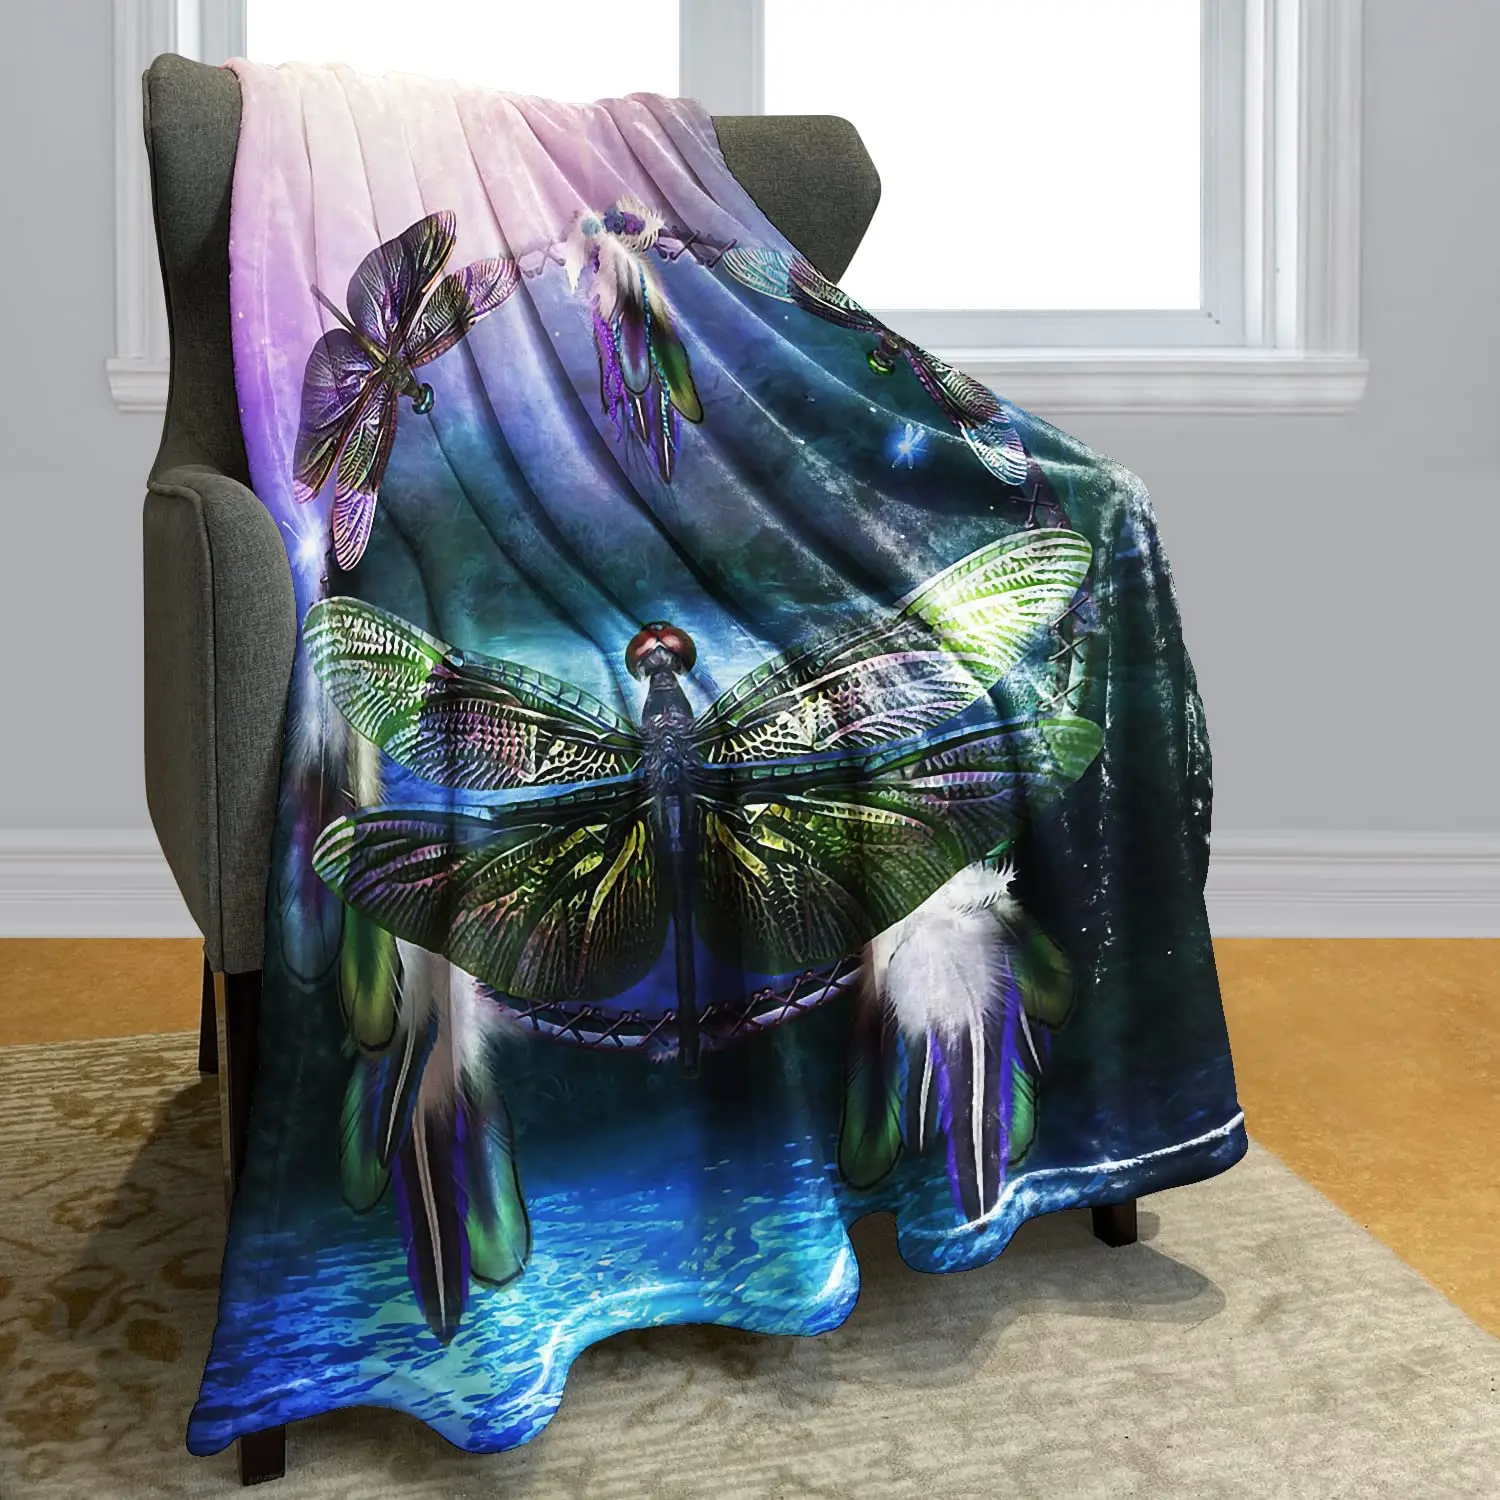 

Dragonfly Animal Fleece Blanket Comfortable Soft Bedroom Decor Dream Catcher Decorative Printed Flannel Plush Throw Blankets Rug